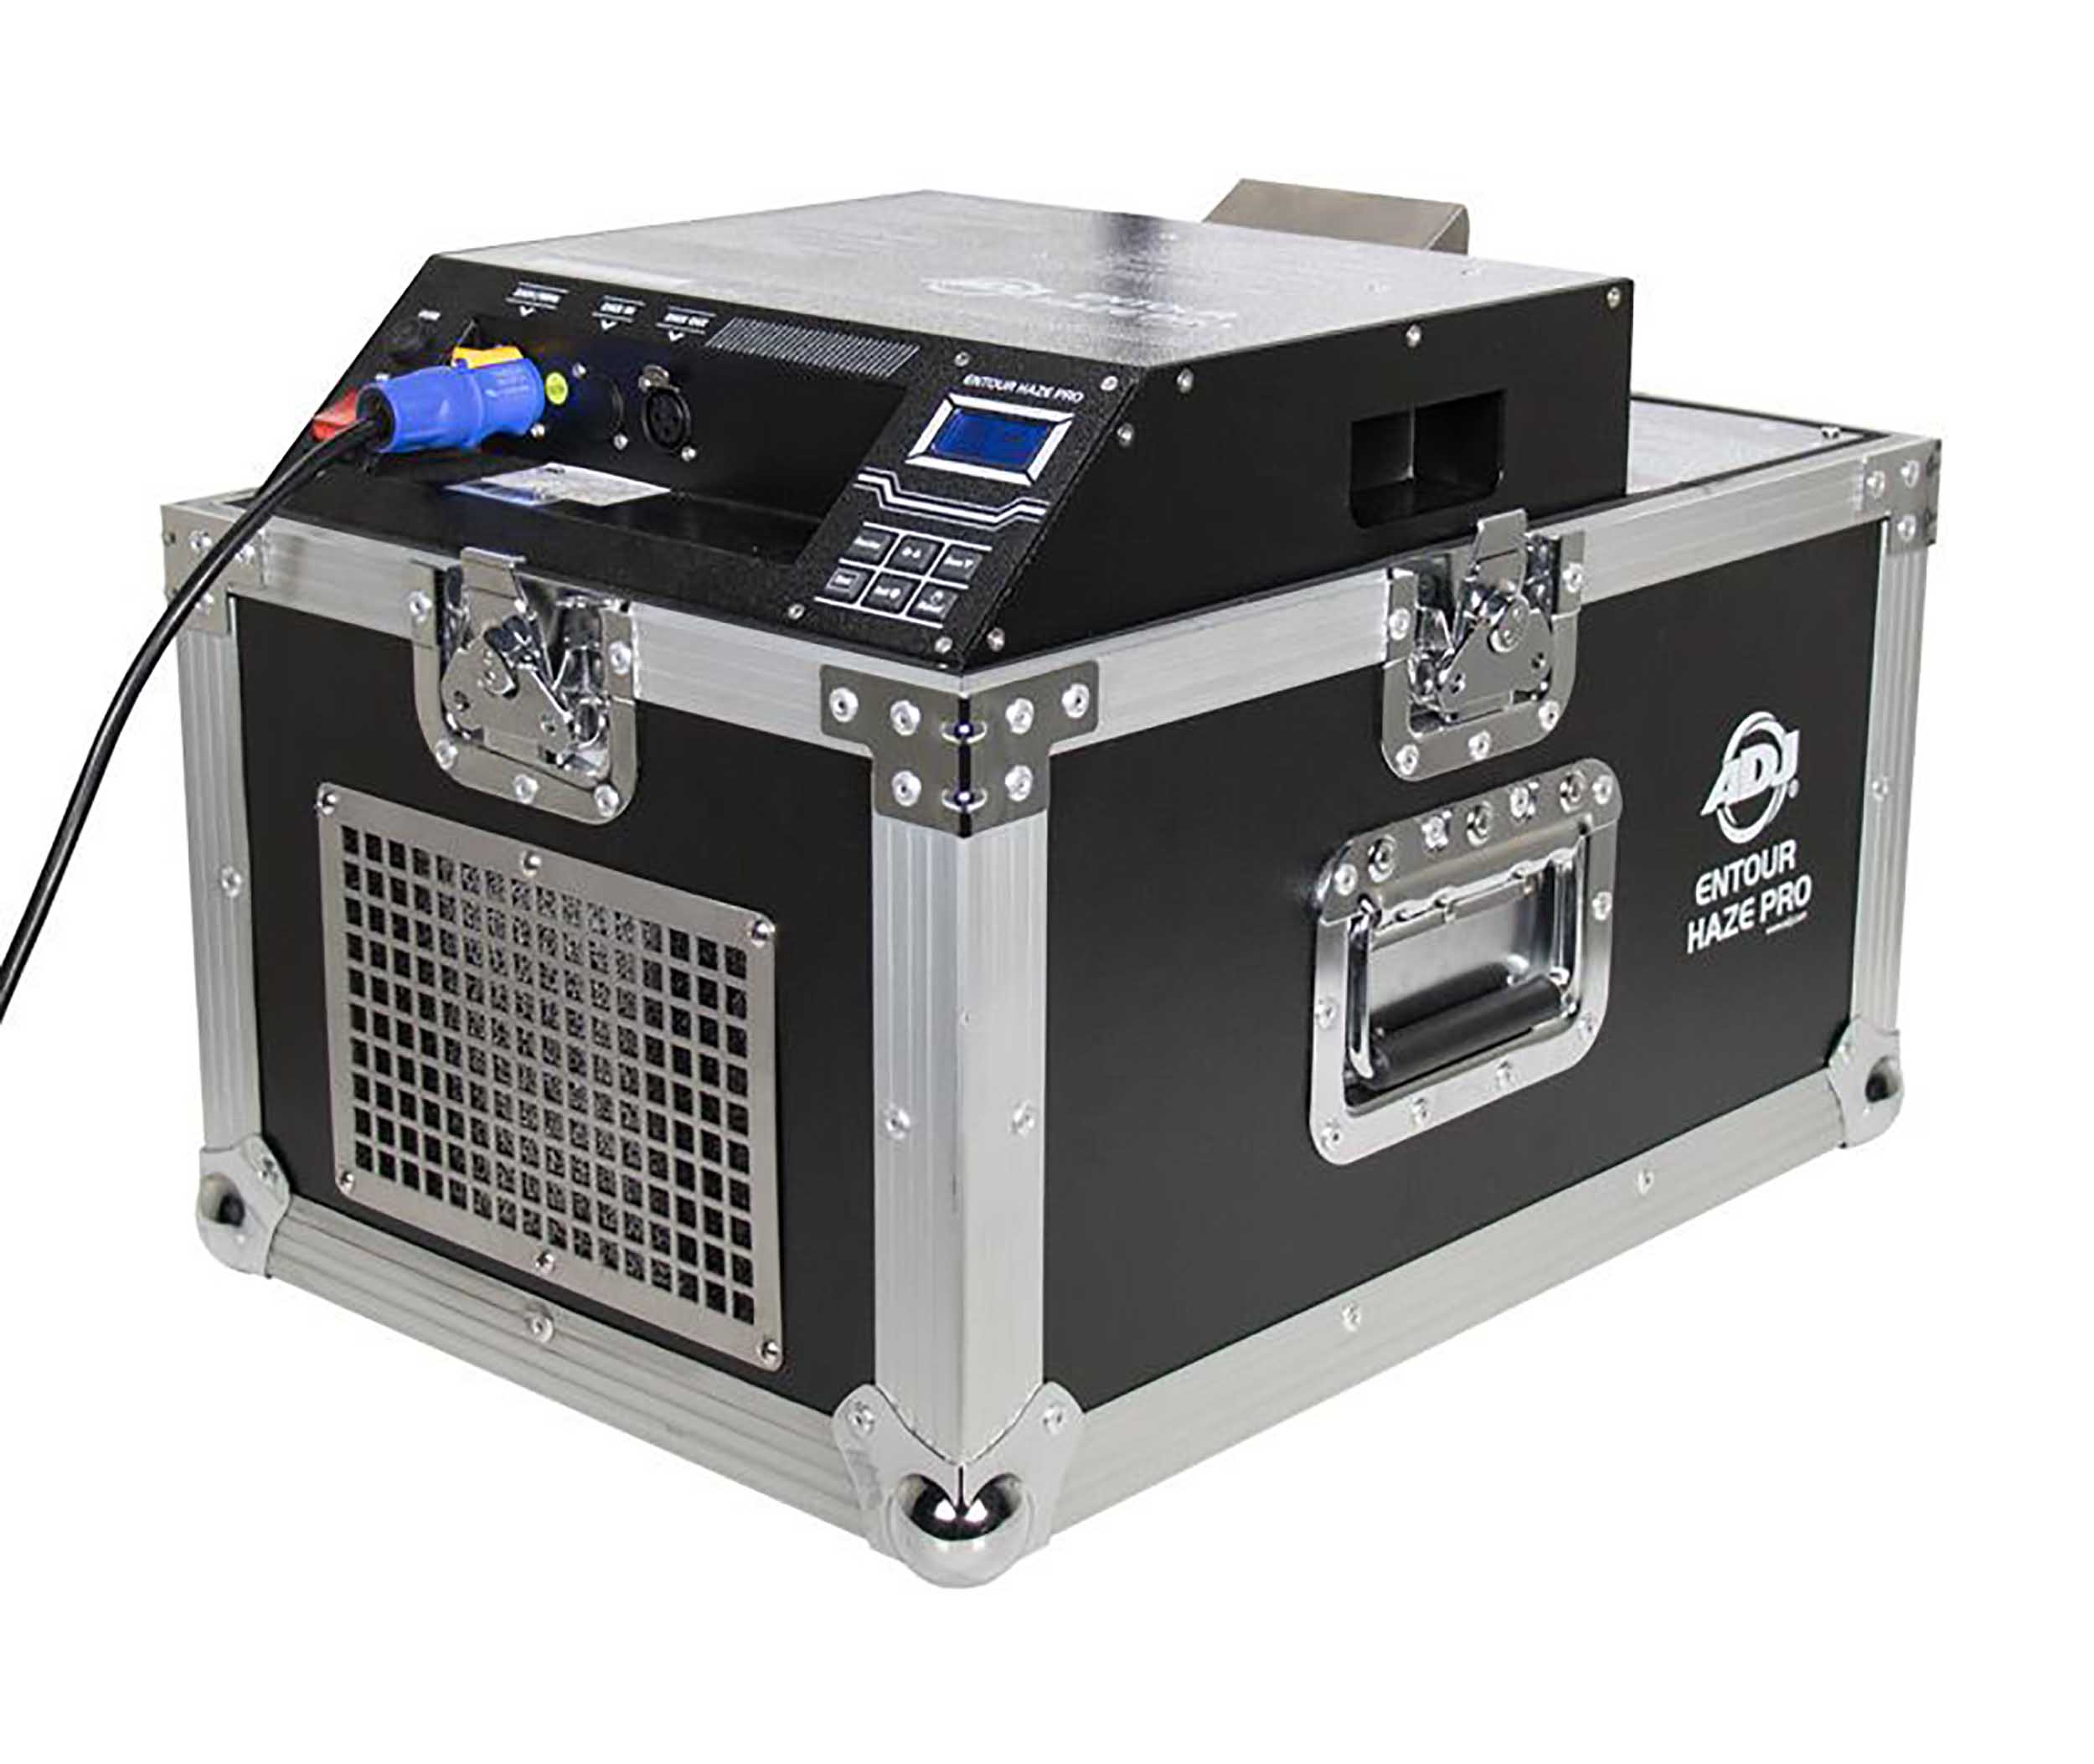 ADJ Entour Haze Pro, Professional Grade Haze Machine with Built-In Flight Case. by ADJ